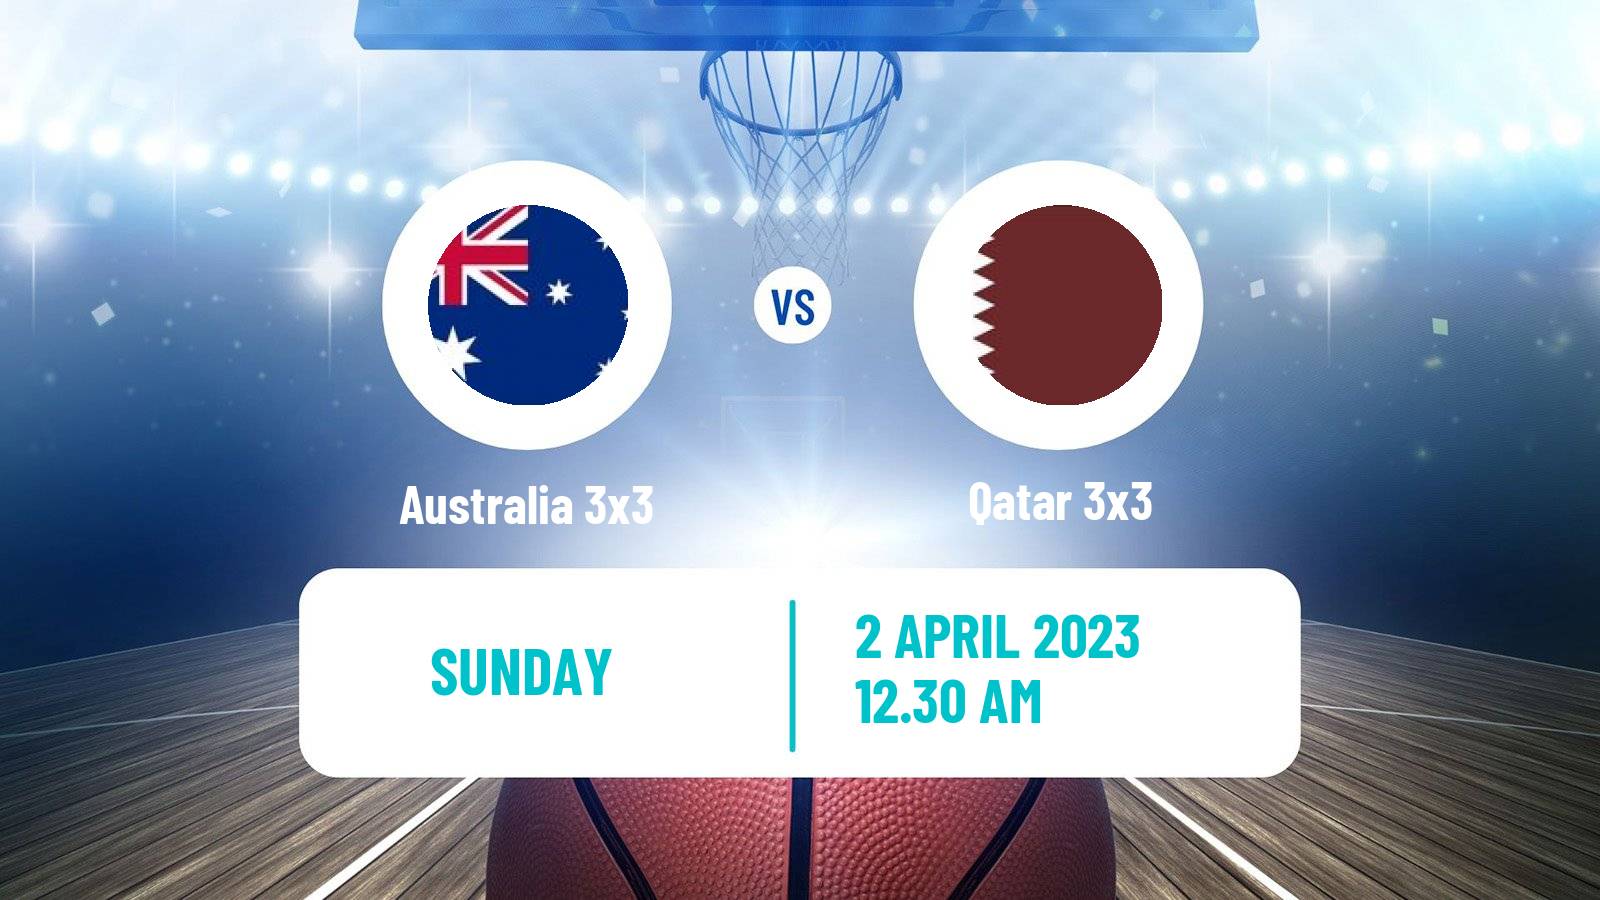 Basketball Asia Cup 3x3 Australia 3x3 - Qatar 3x3